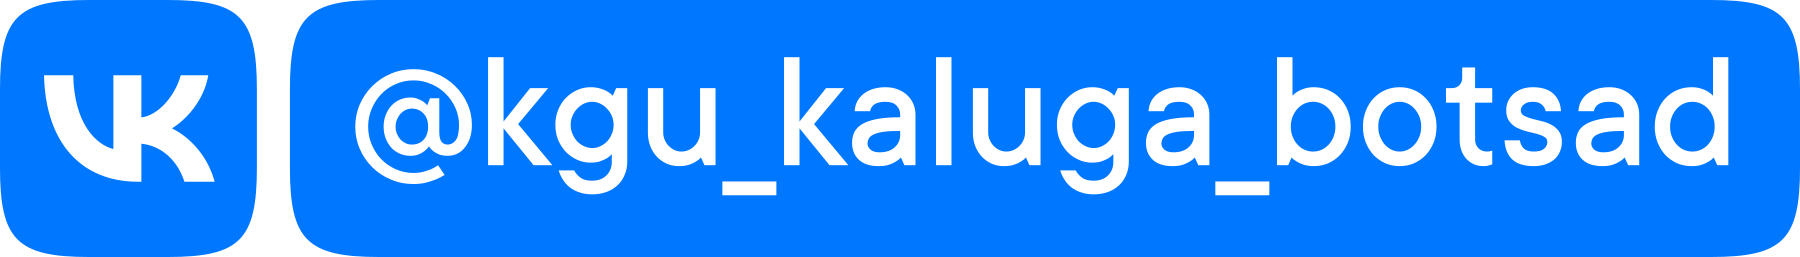 logo_kgu_kaluga_botsad.png